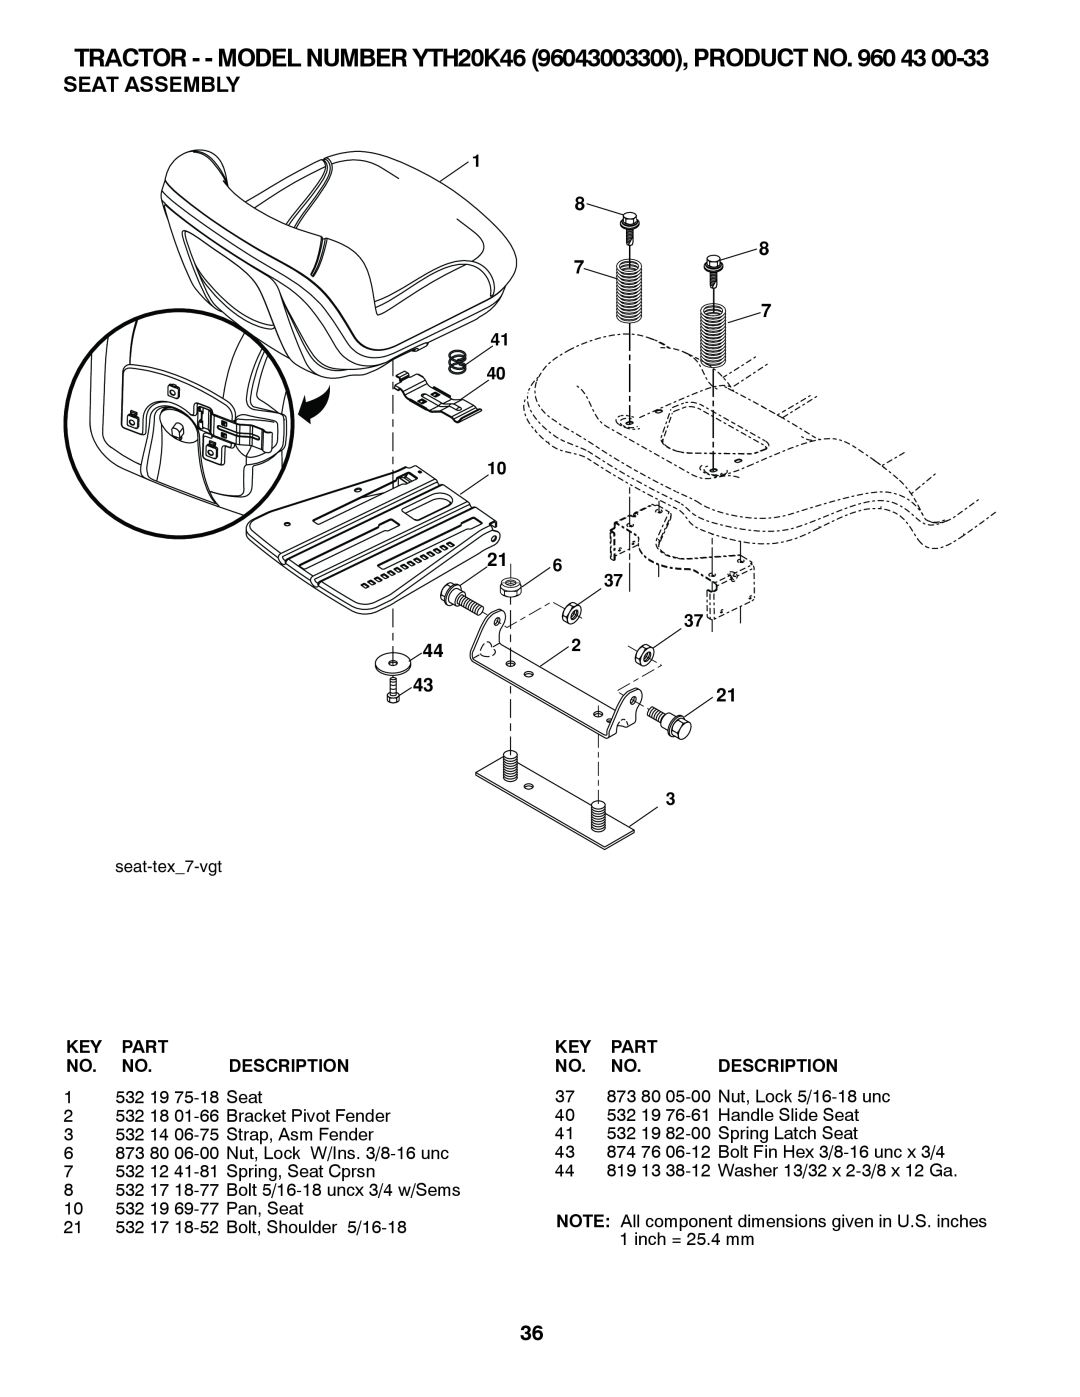 Husqvarna YTH20K46 owner manual Seat Assembly, Key Part No. No. Description 